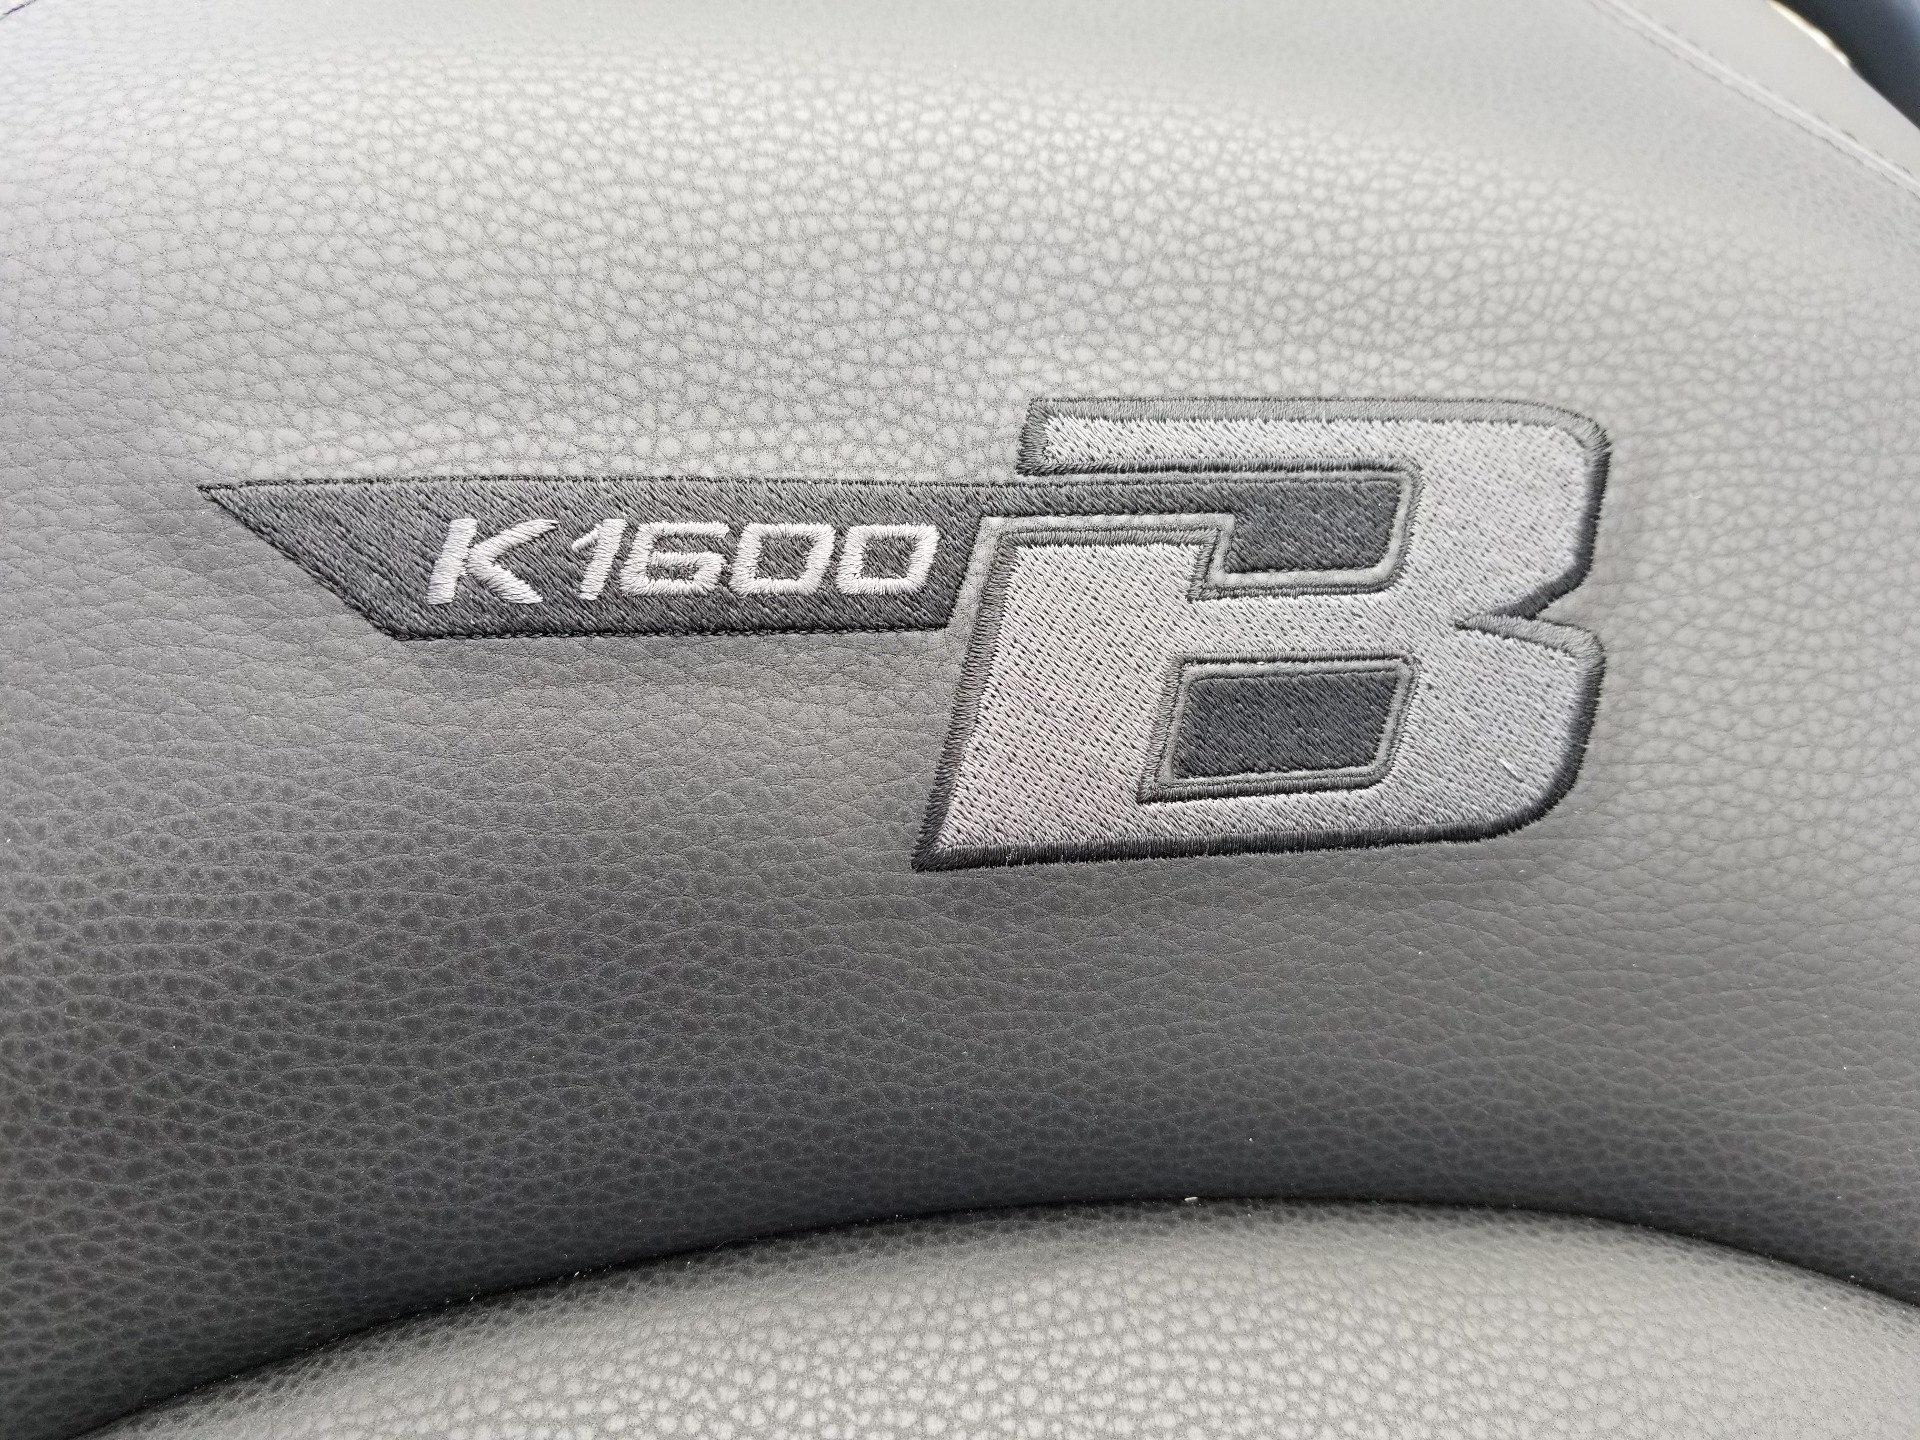 2022 BMW K 1600 B in Aurora, Ohio - Photo 3